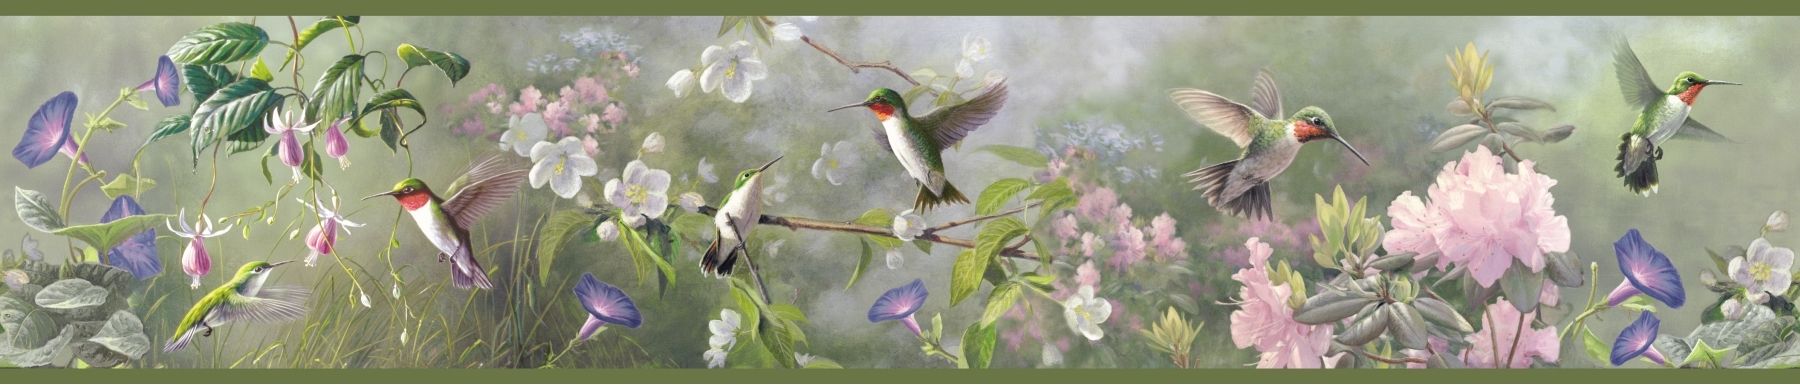 Hummingbird Border , HD Wallpaper & Backgrounds